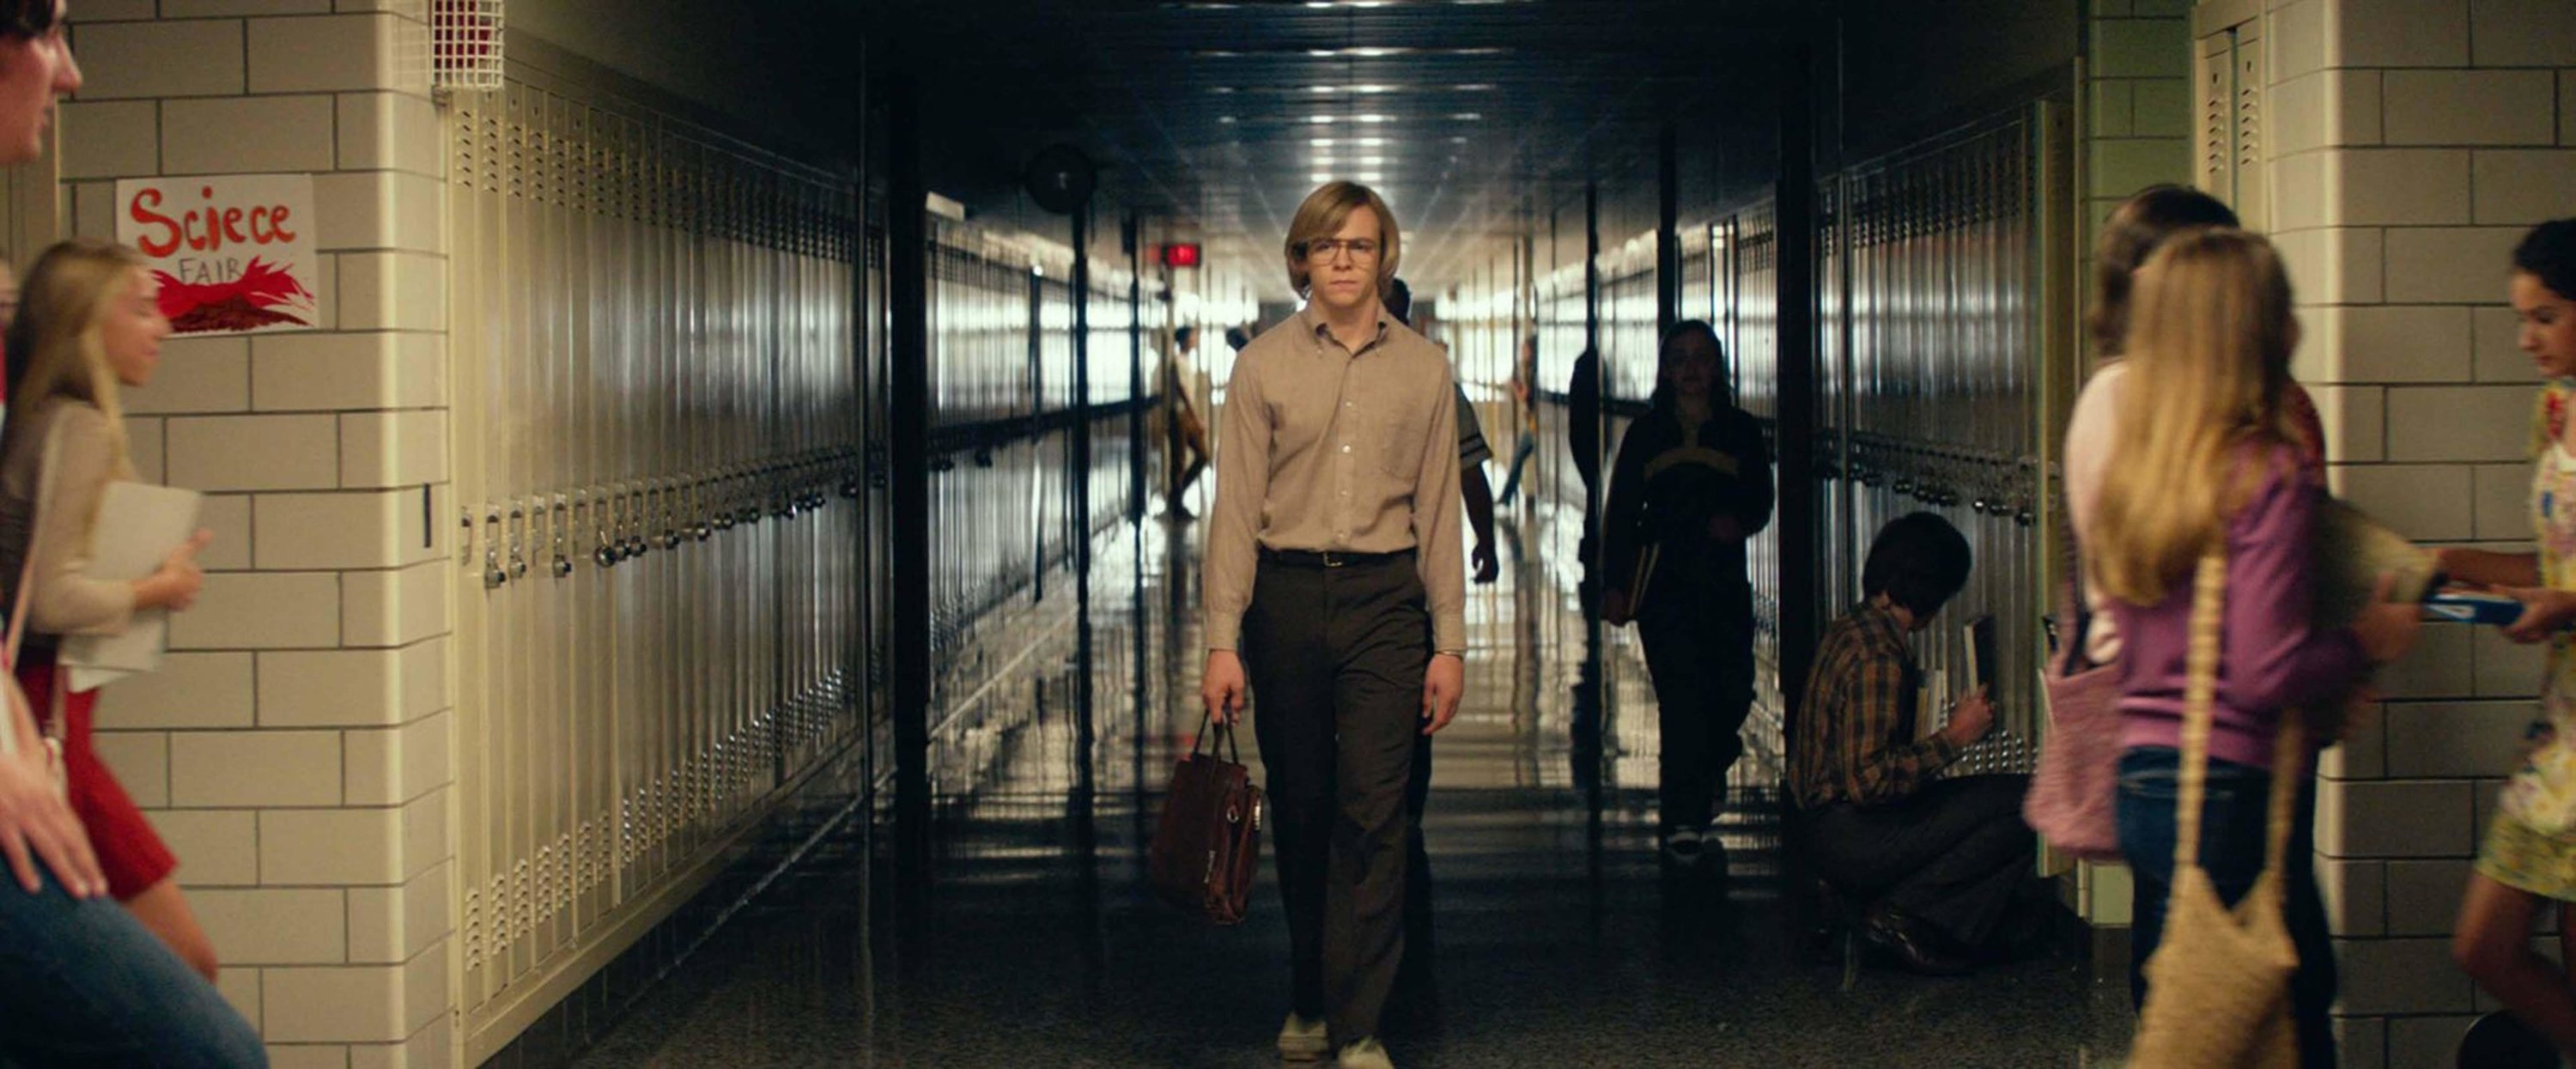 A young bespectacled man wanders through a dark high school hallway